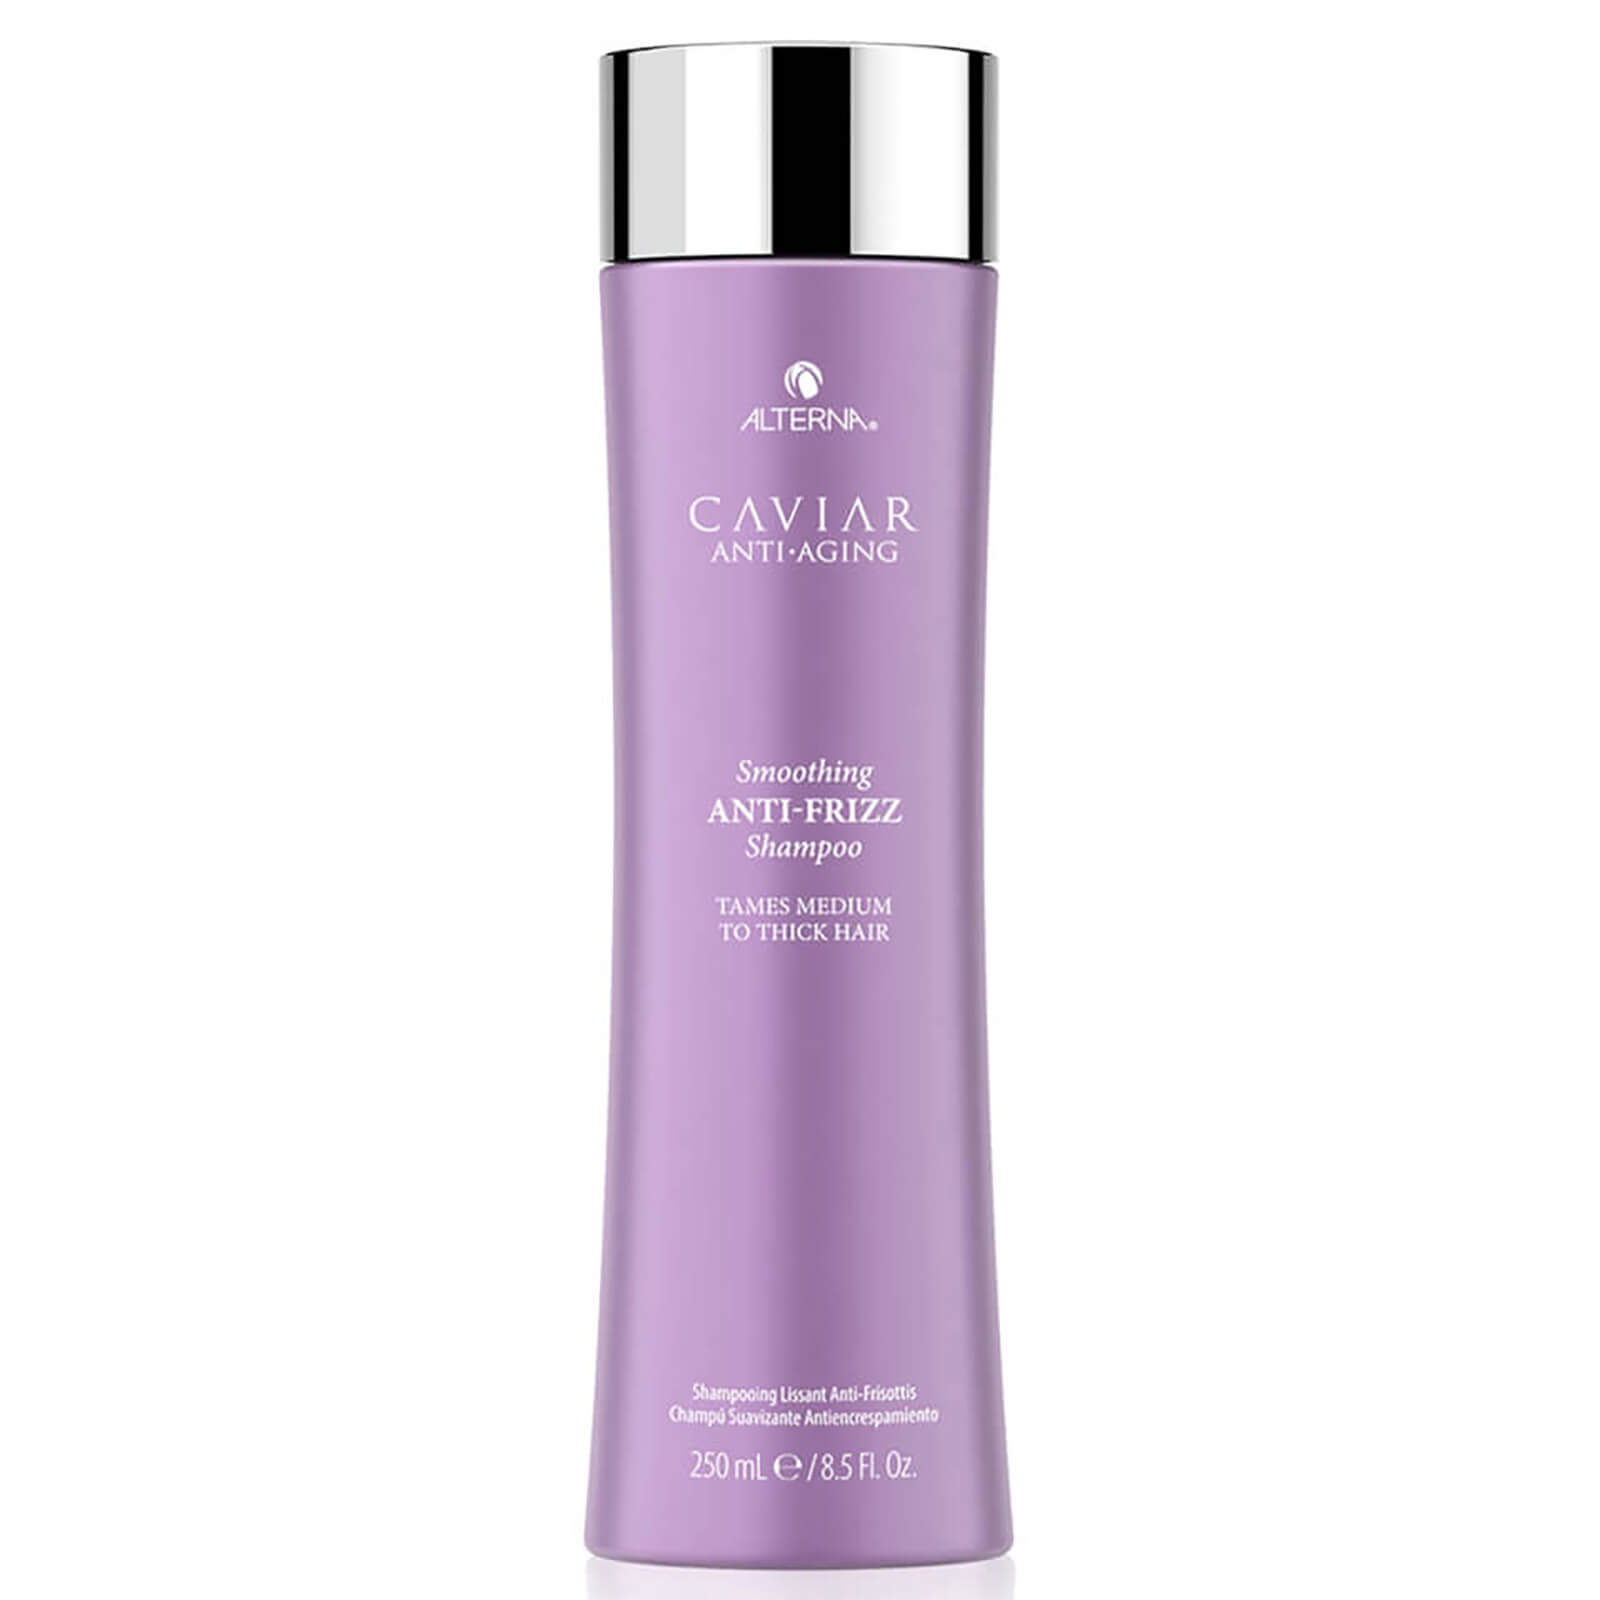 Alterna Caviar Anti-Aging Smoothing Anti-Frizz Shampoo 8.5 oz lookfantastic.com imagine